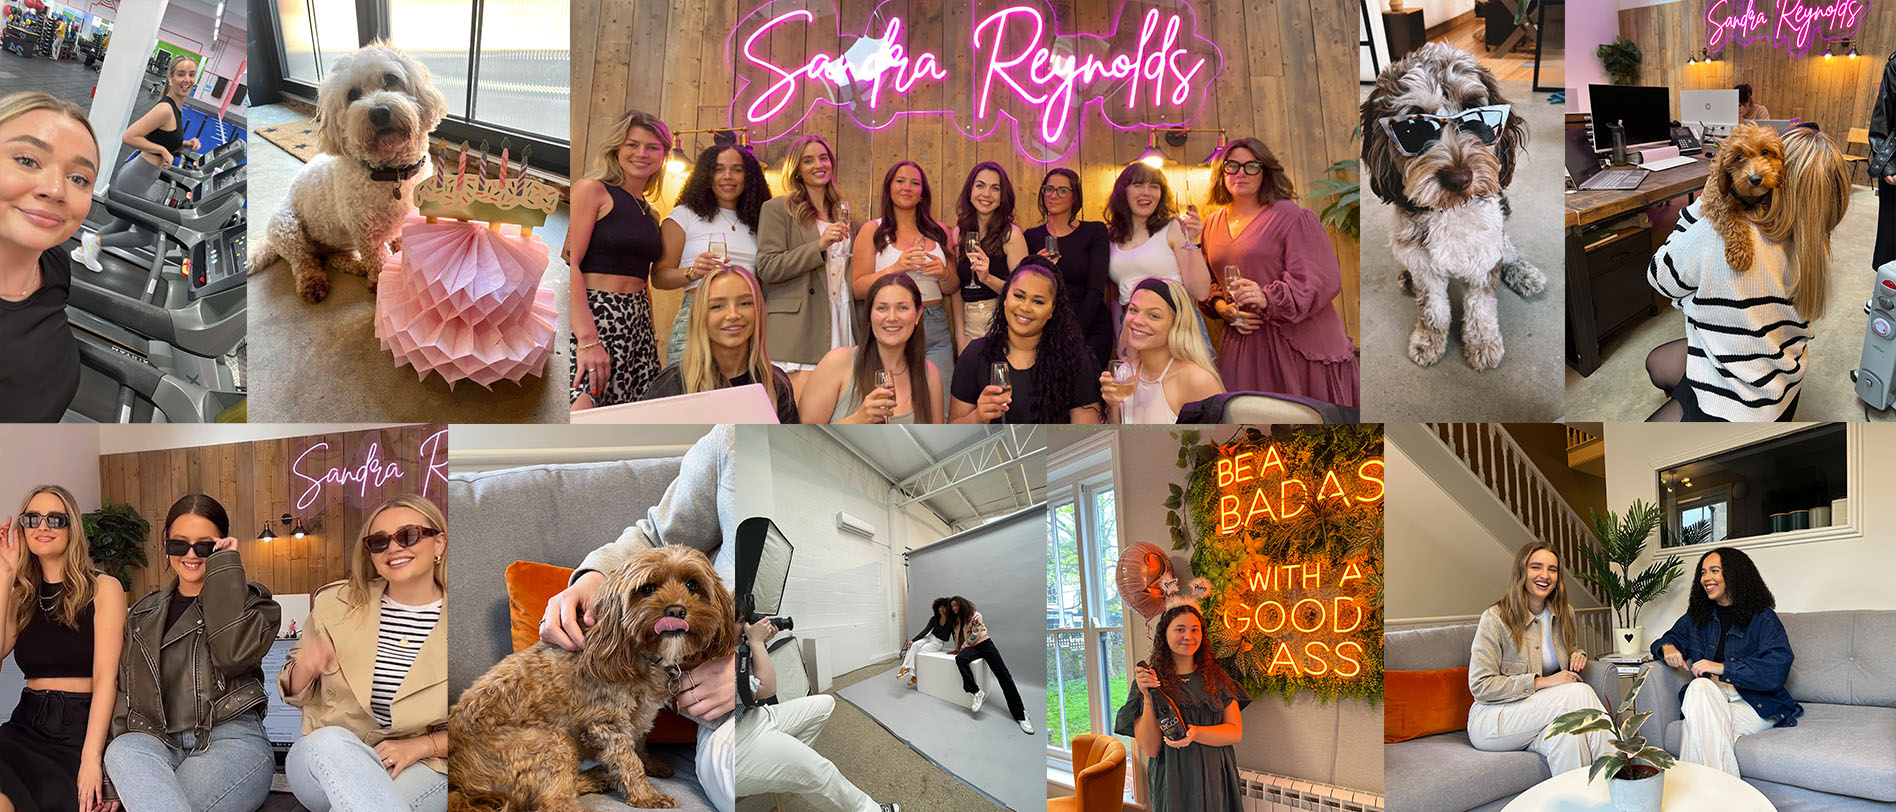 Sandra Reynolds Model Agency Photo Collage